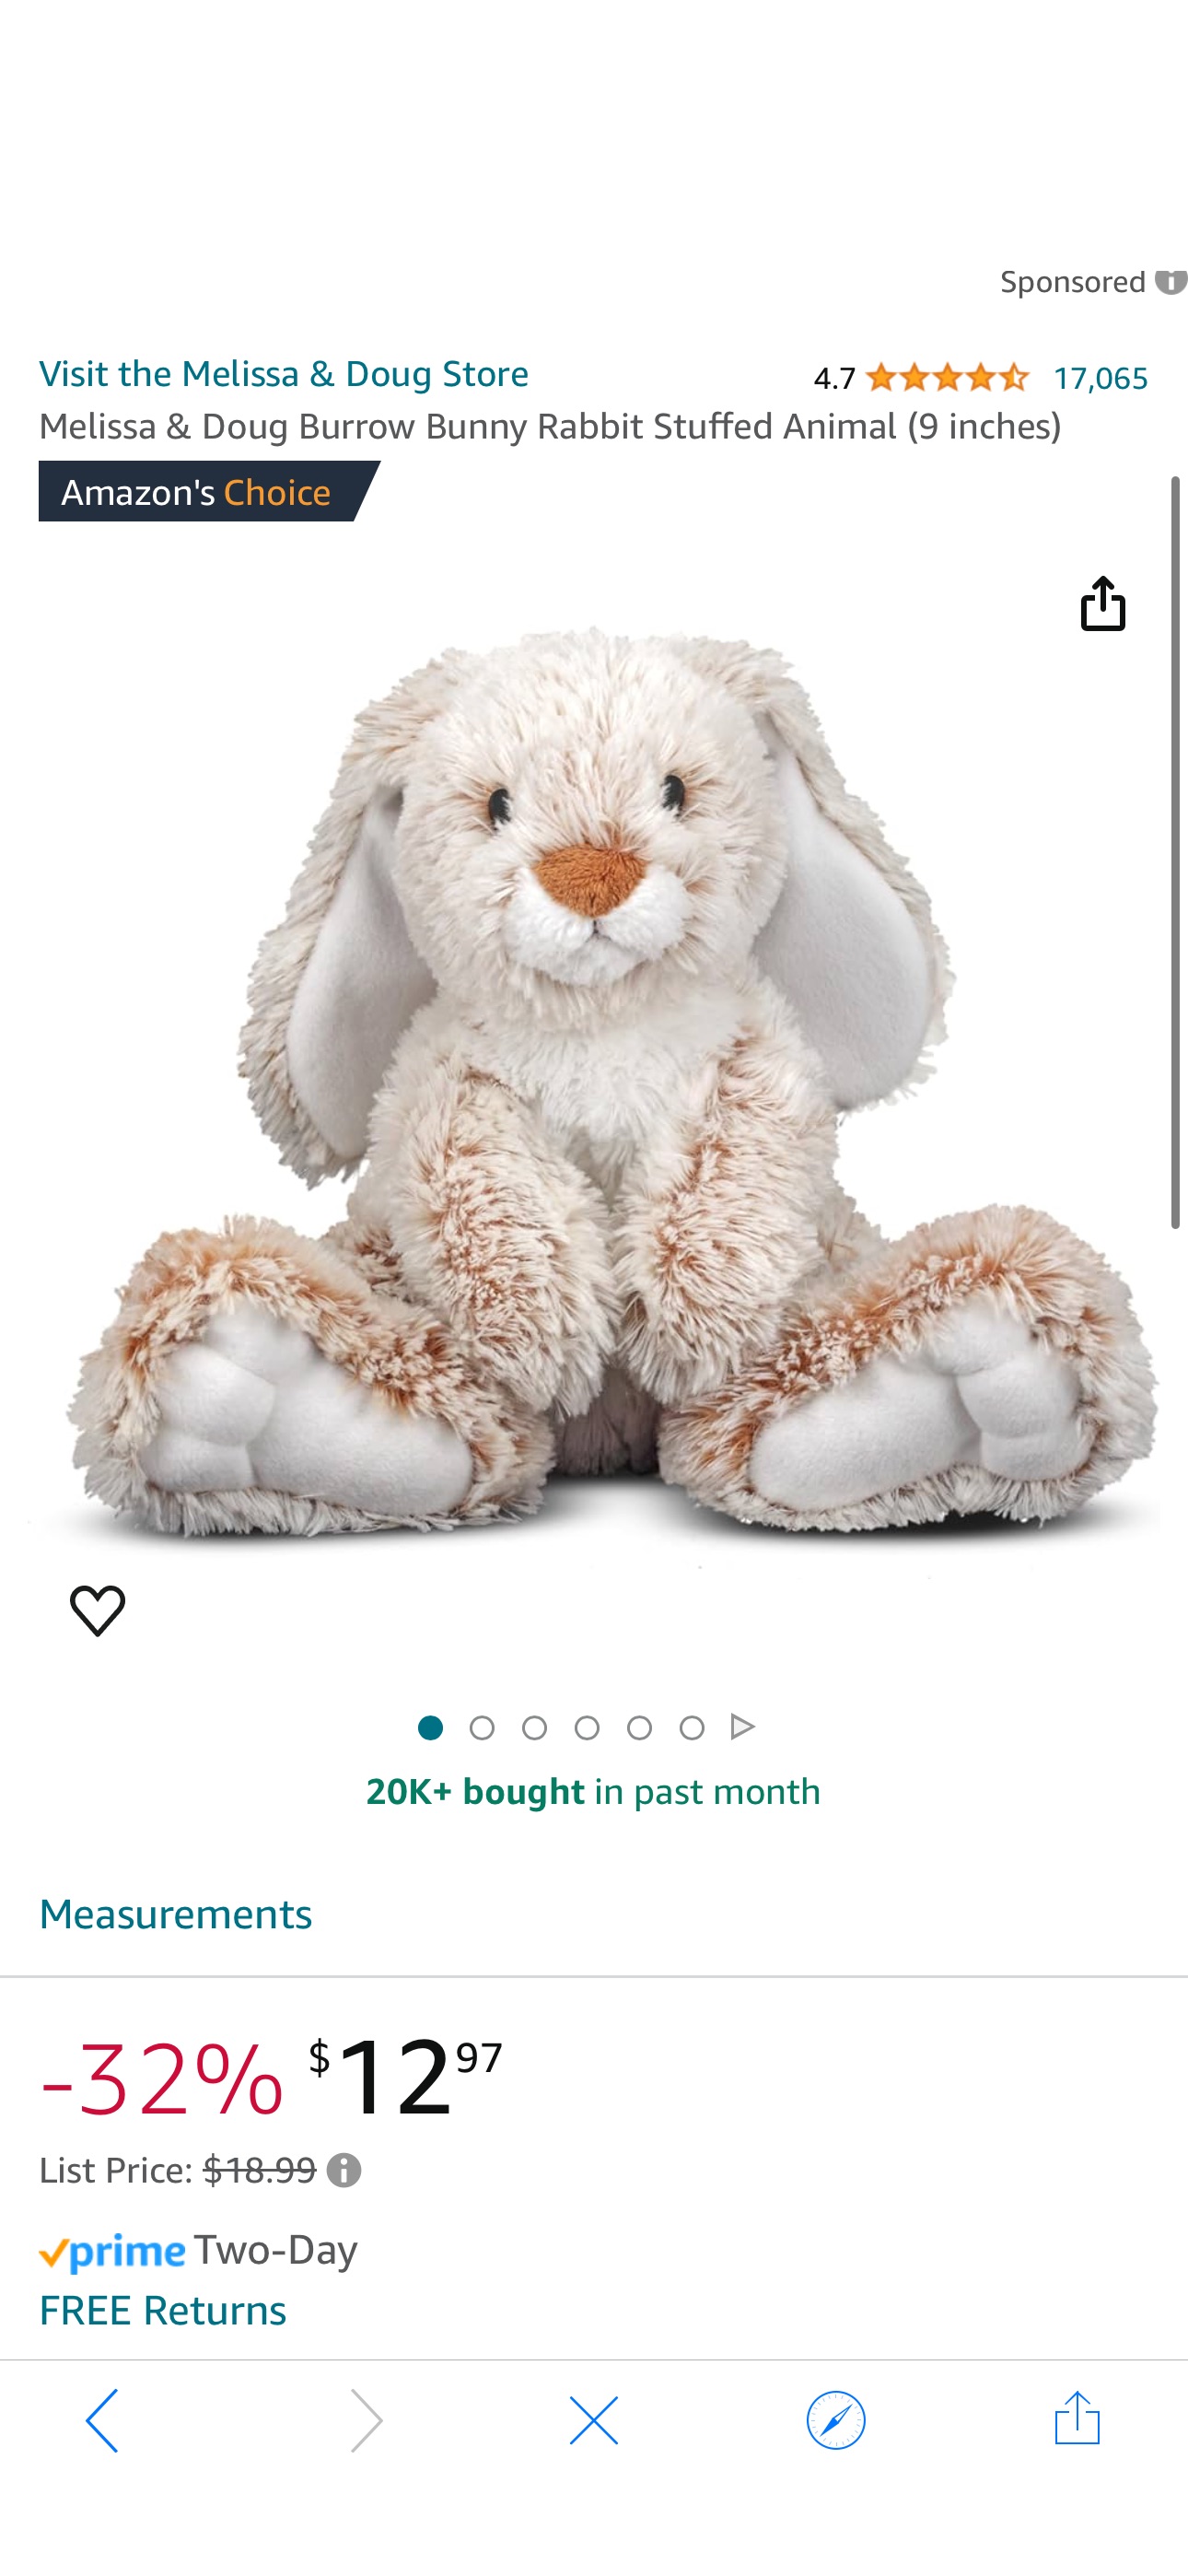 Amazon.com: Melissa & Doug Burrow Bunny Rabbit Stuffed Animal (9 inches) : Melissa & Doug: Toys & Games